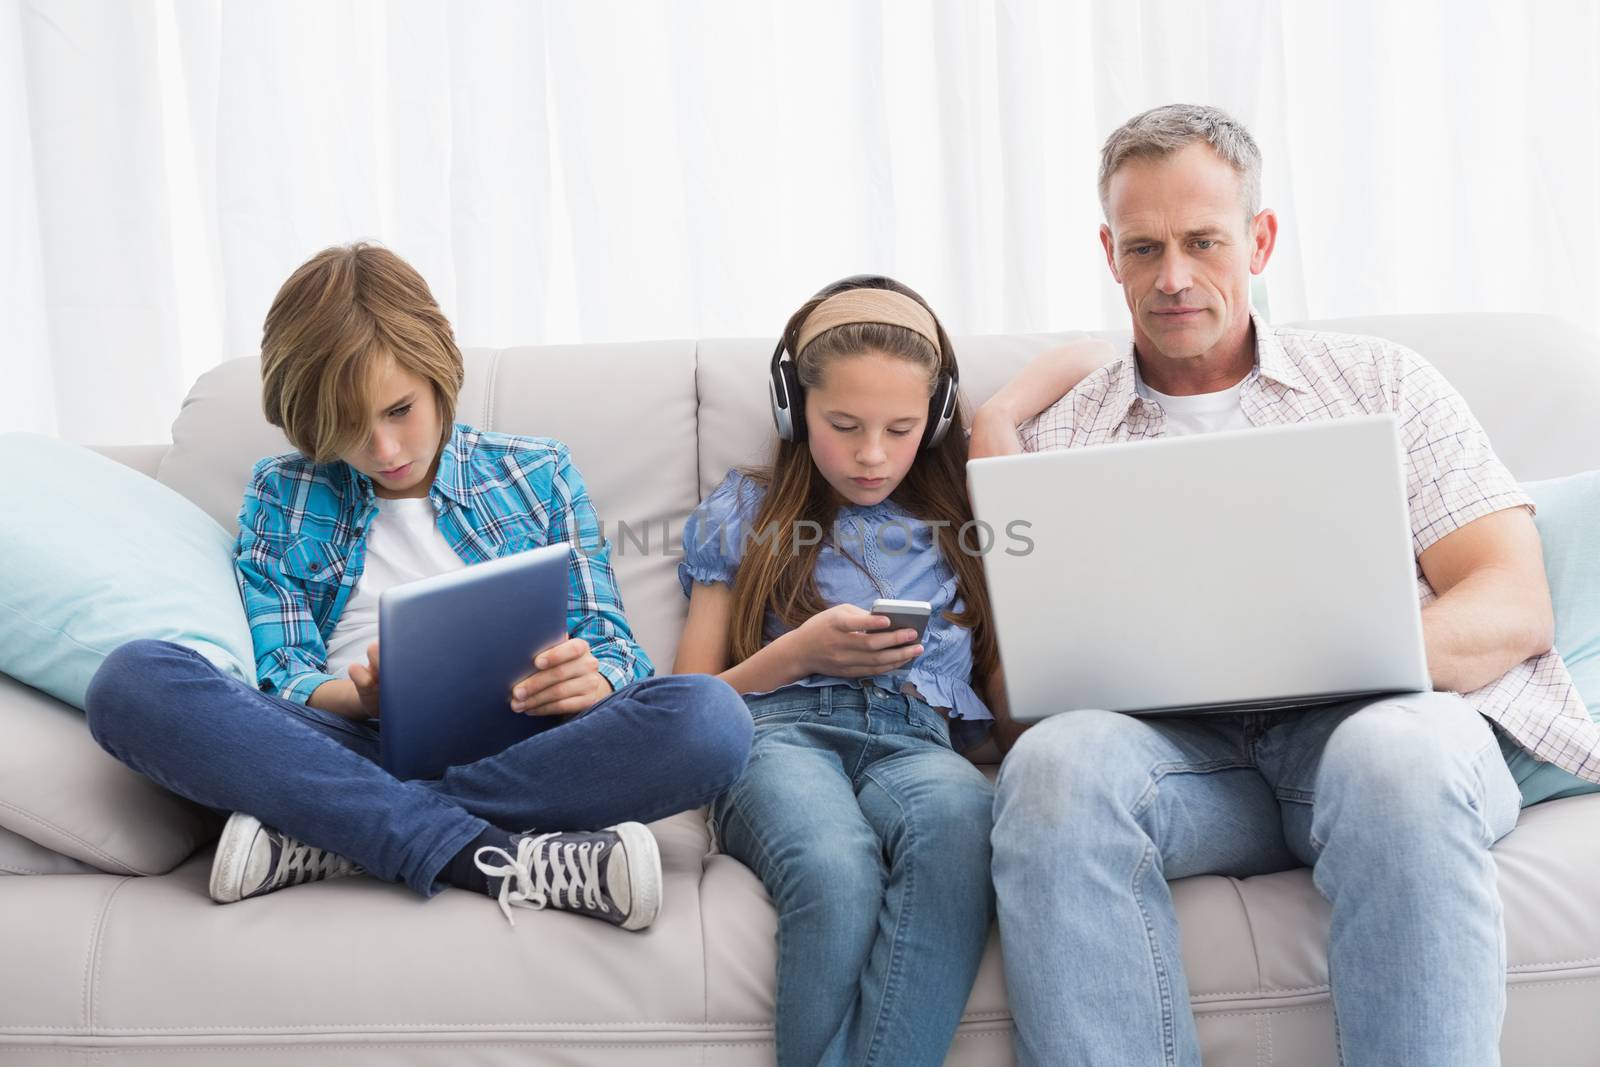 Family focus on wireless technology by Wavebreakmedia